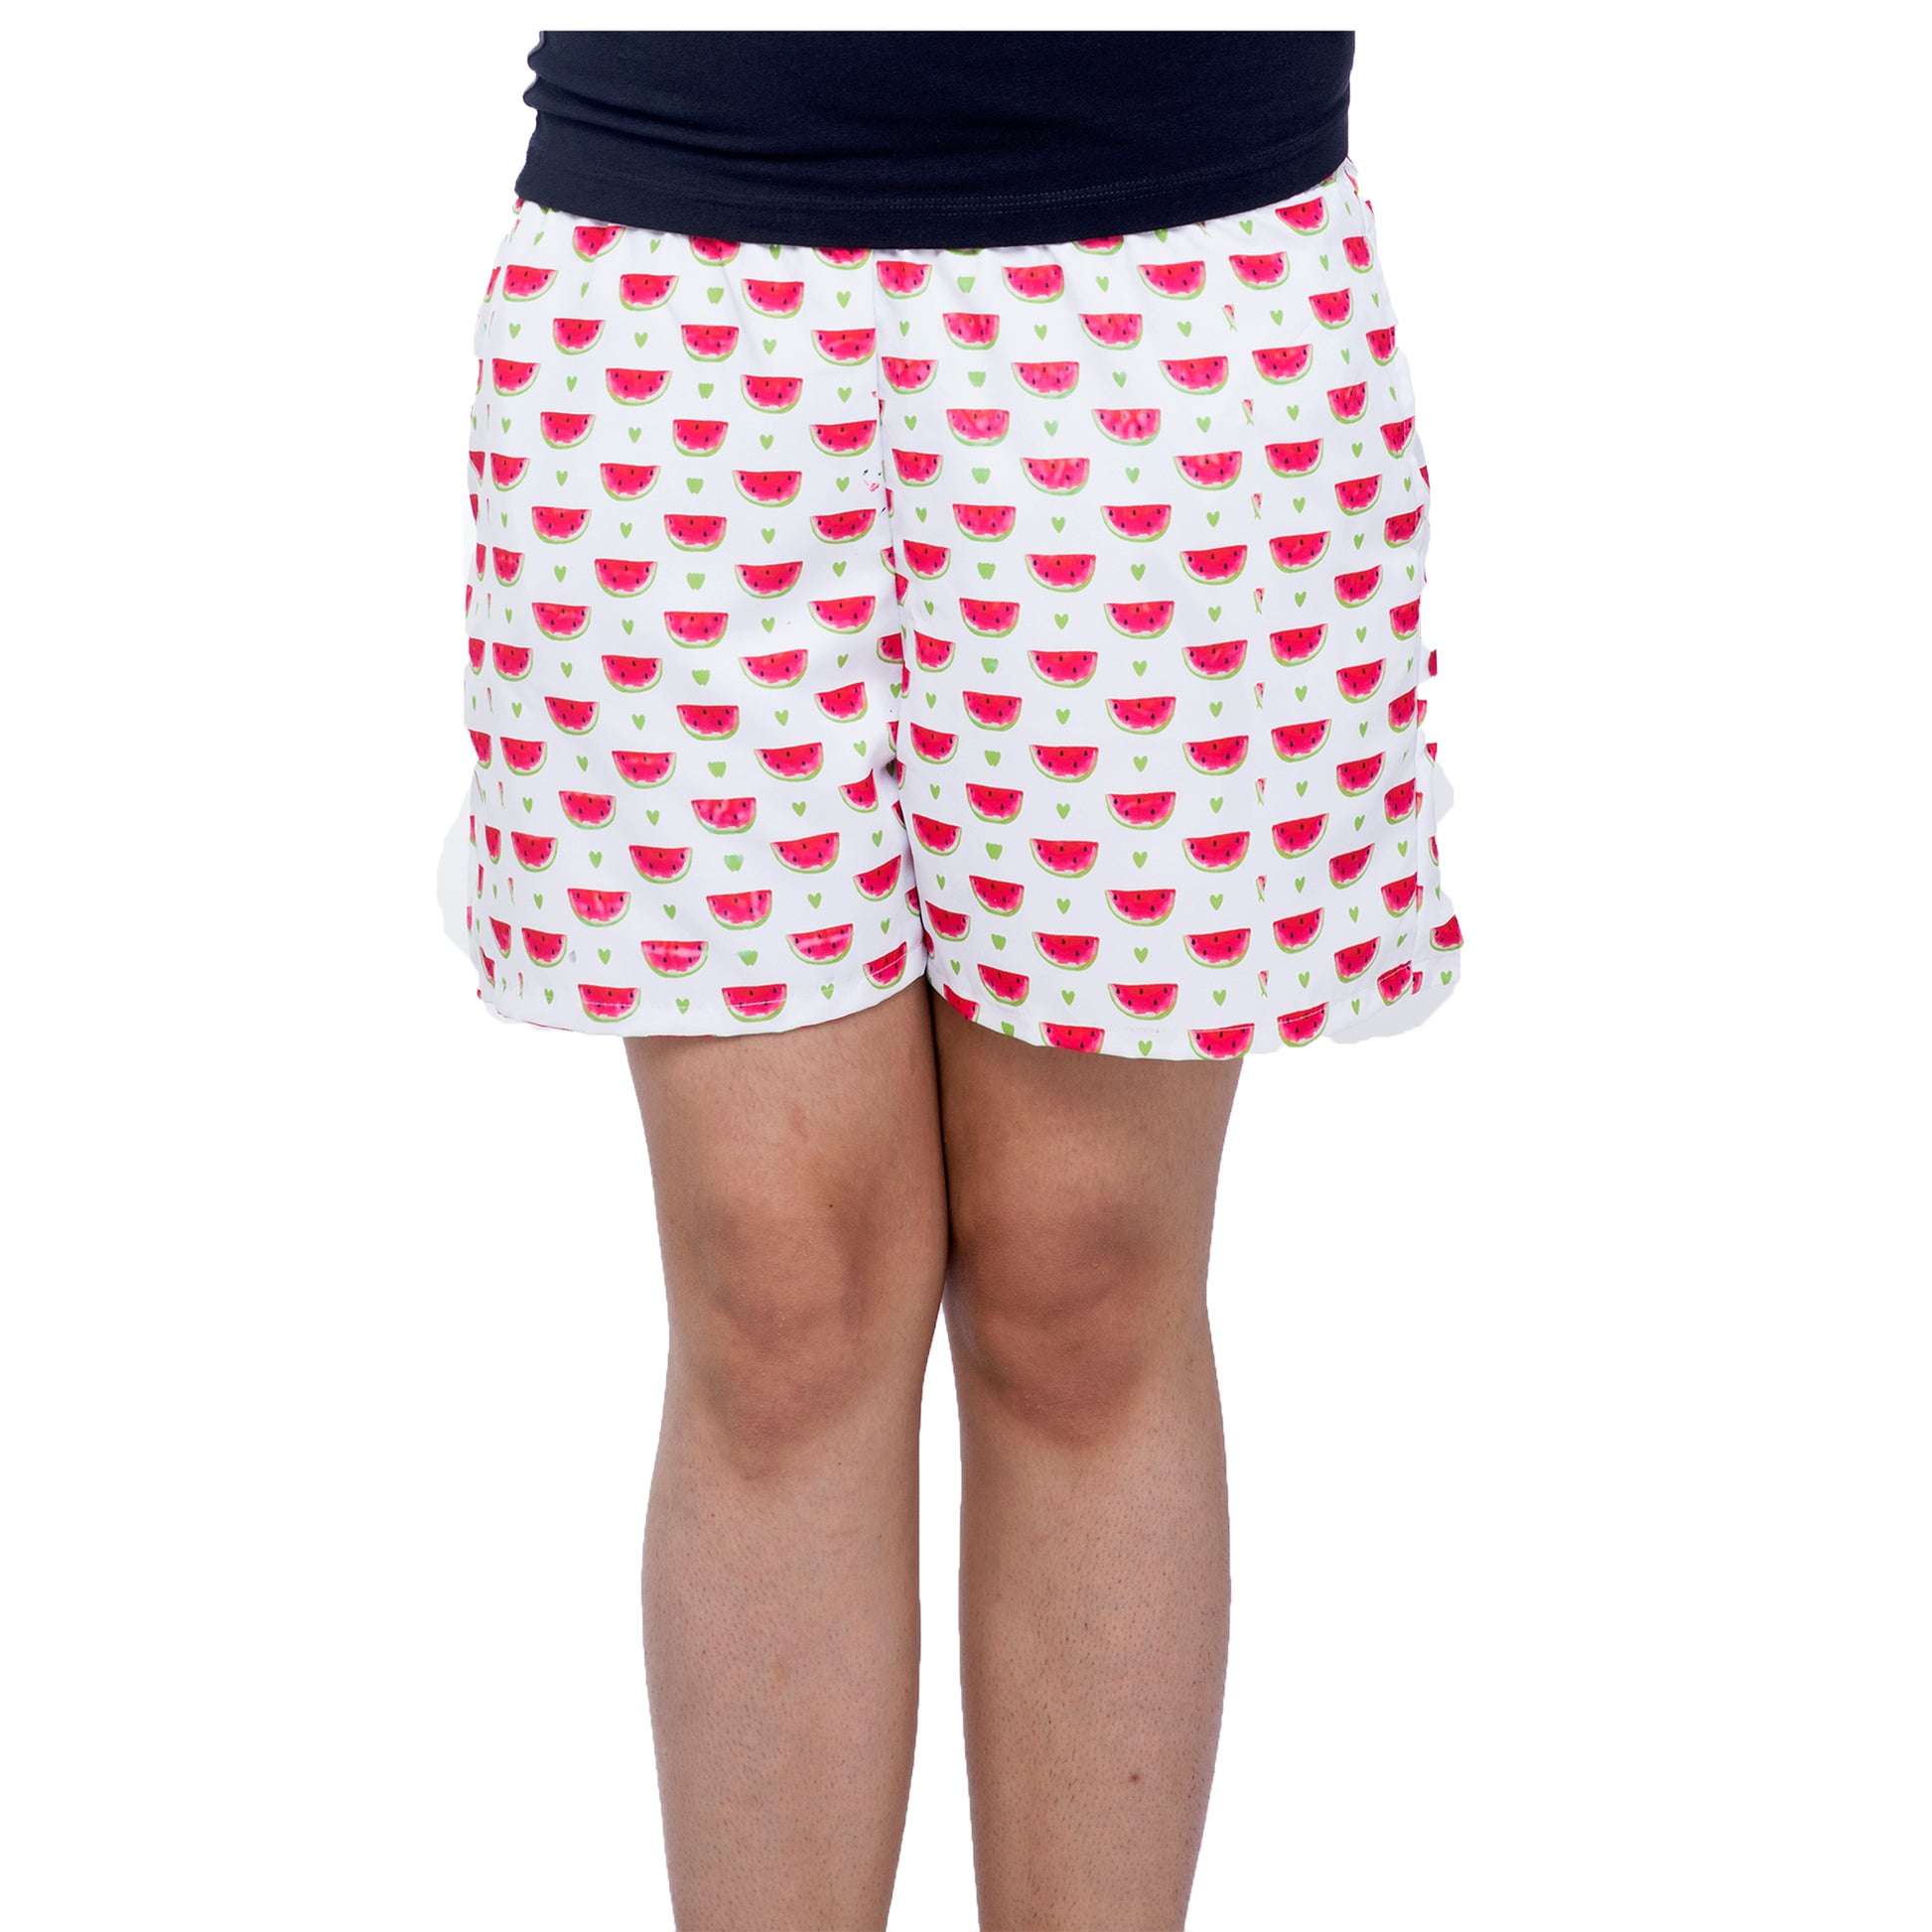 watermelon-print-women's-boxer-shorts-online